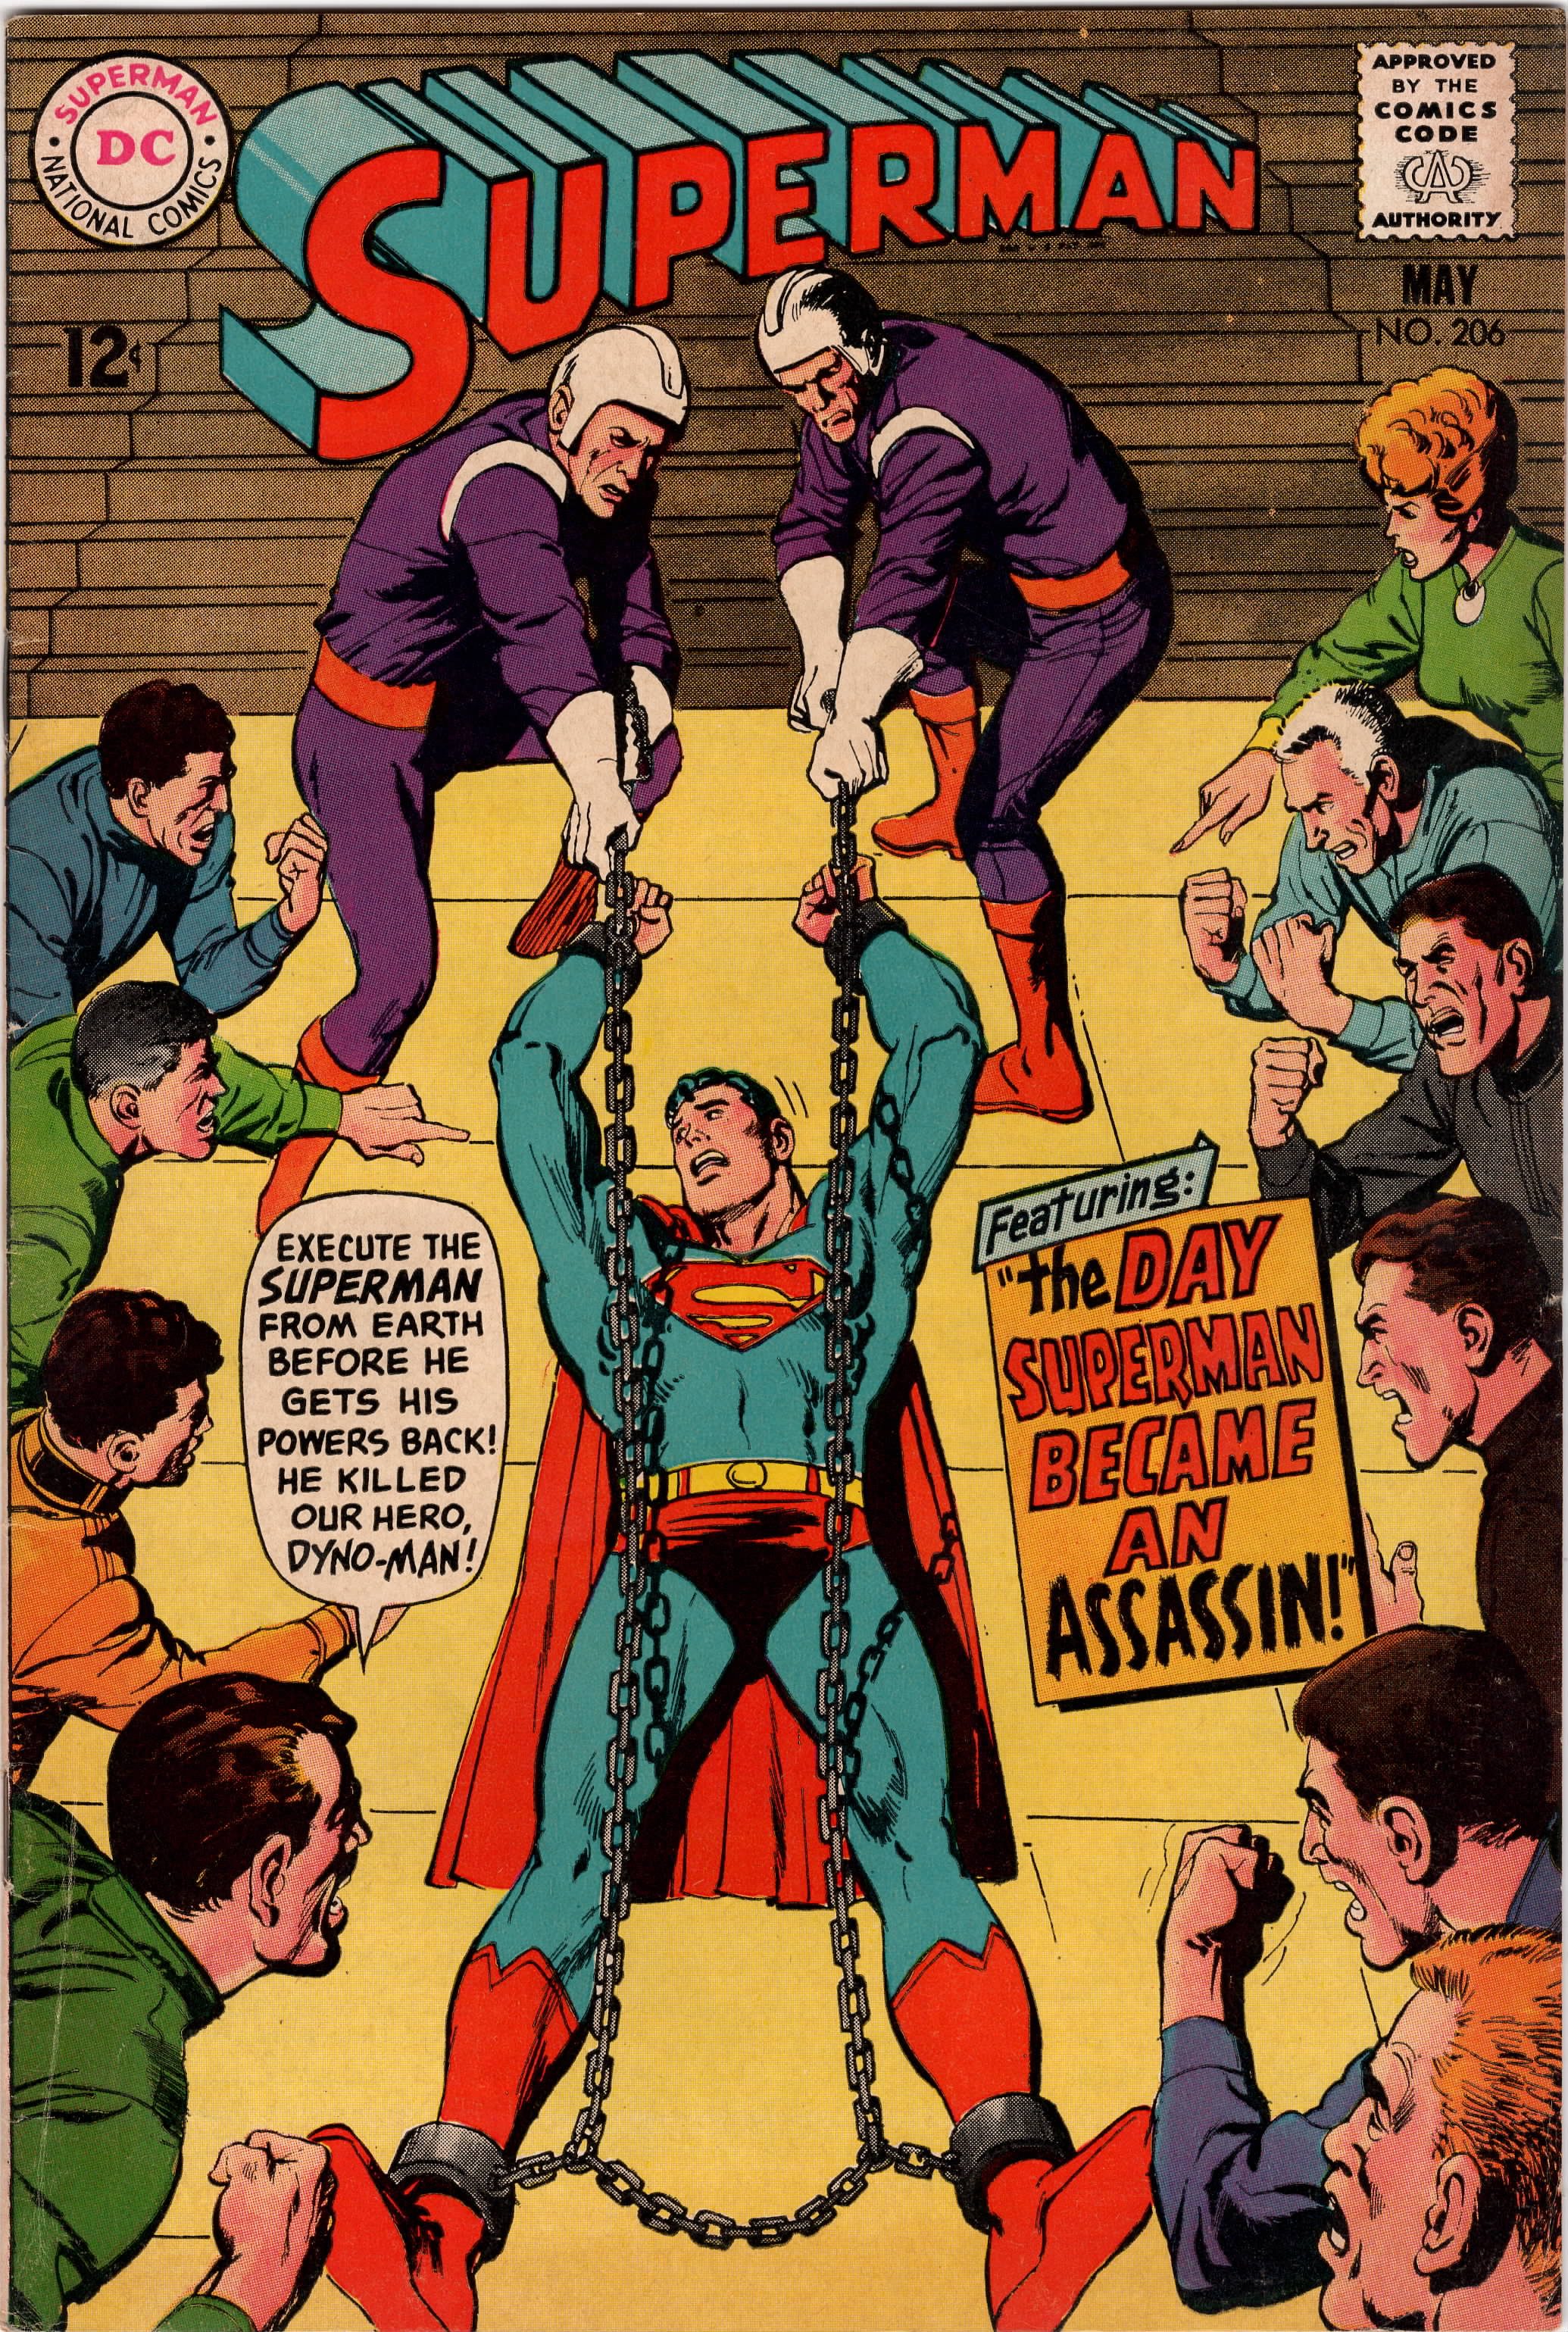 Superman #206